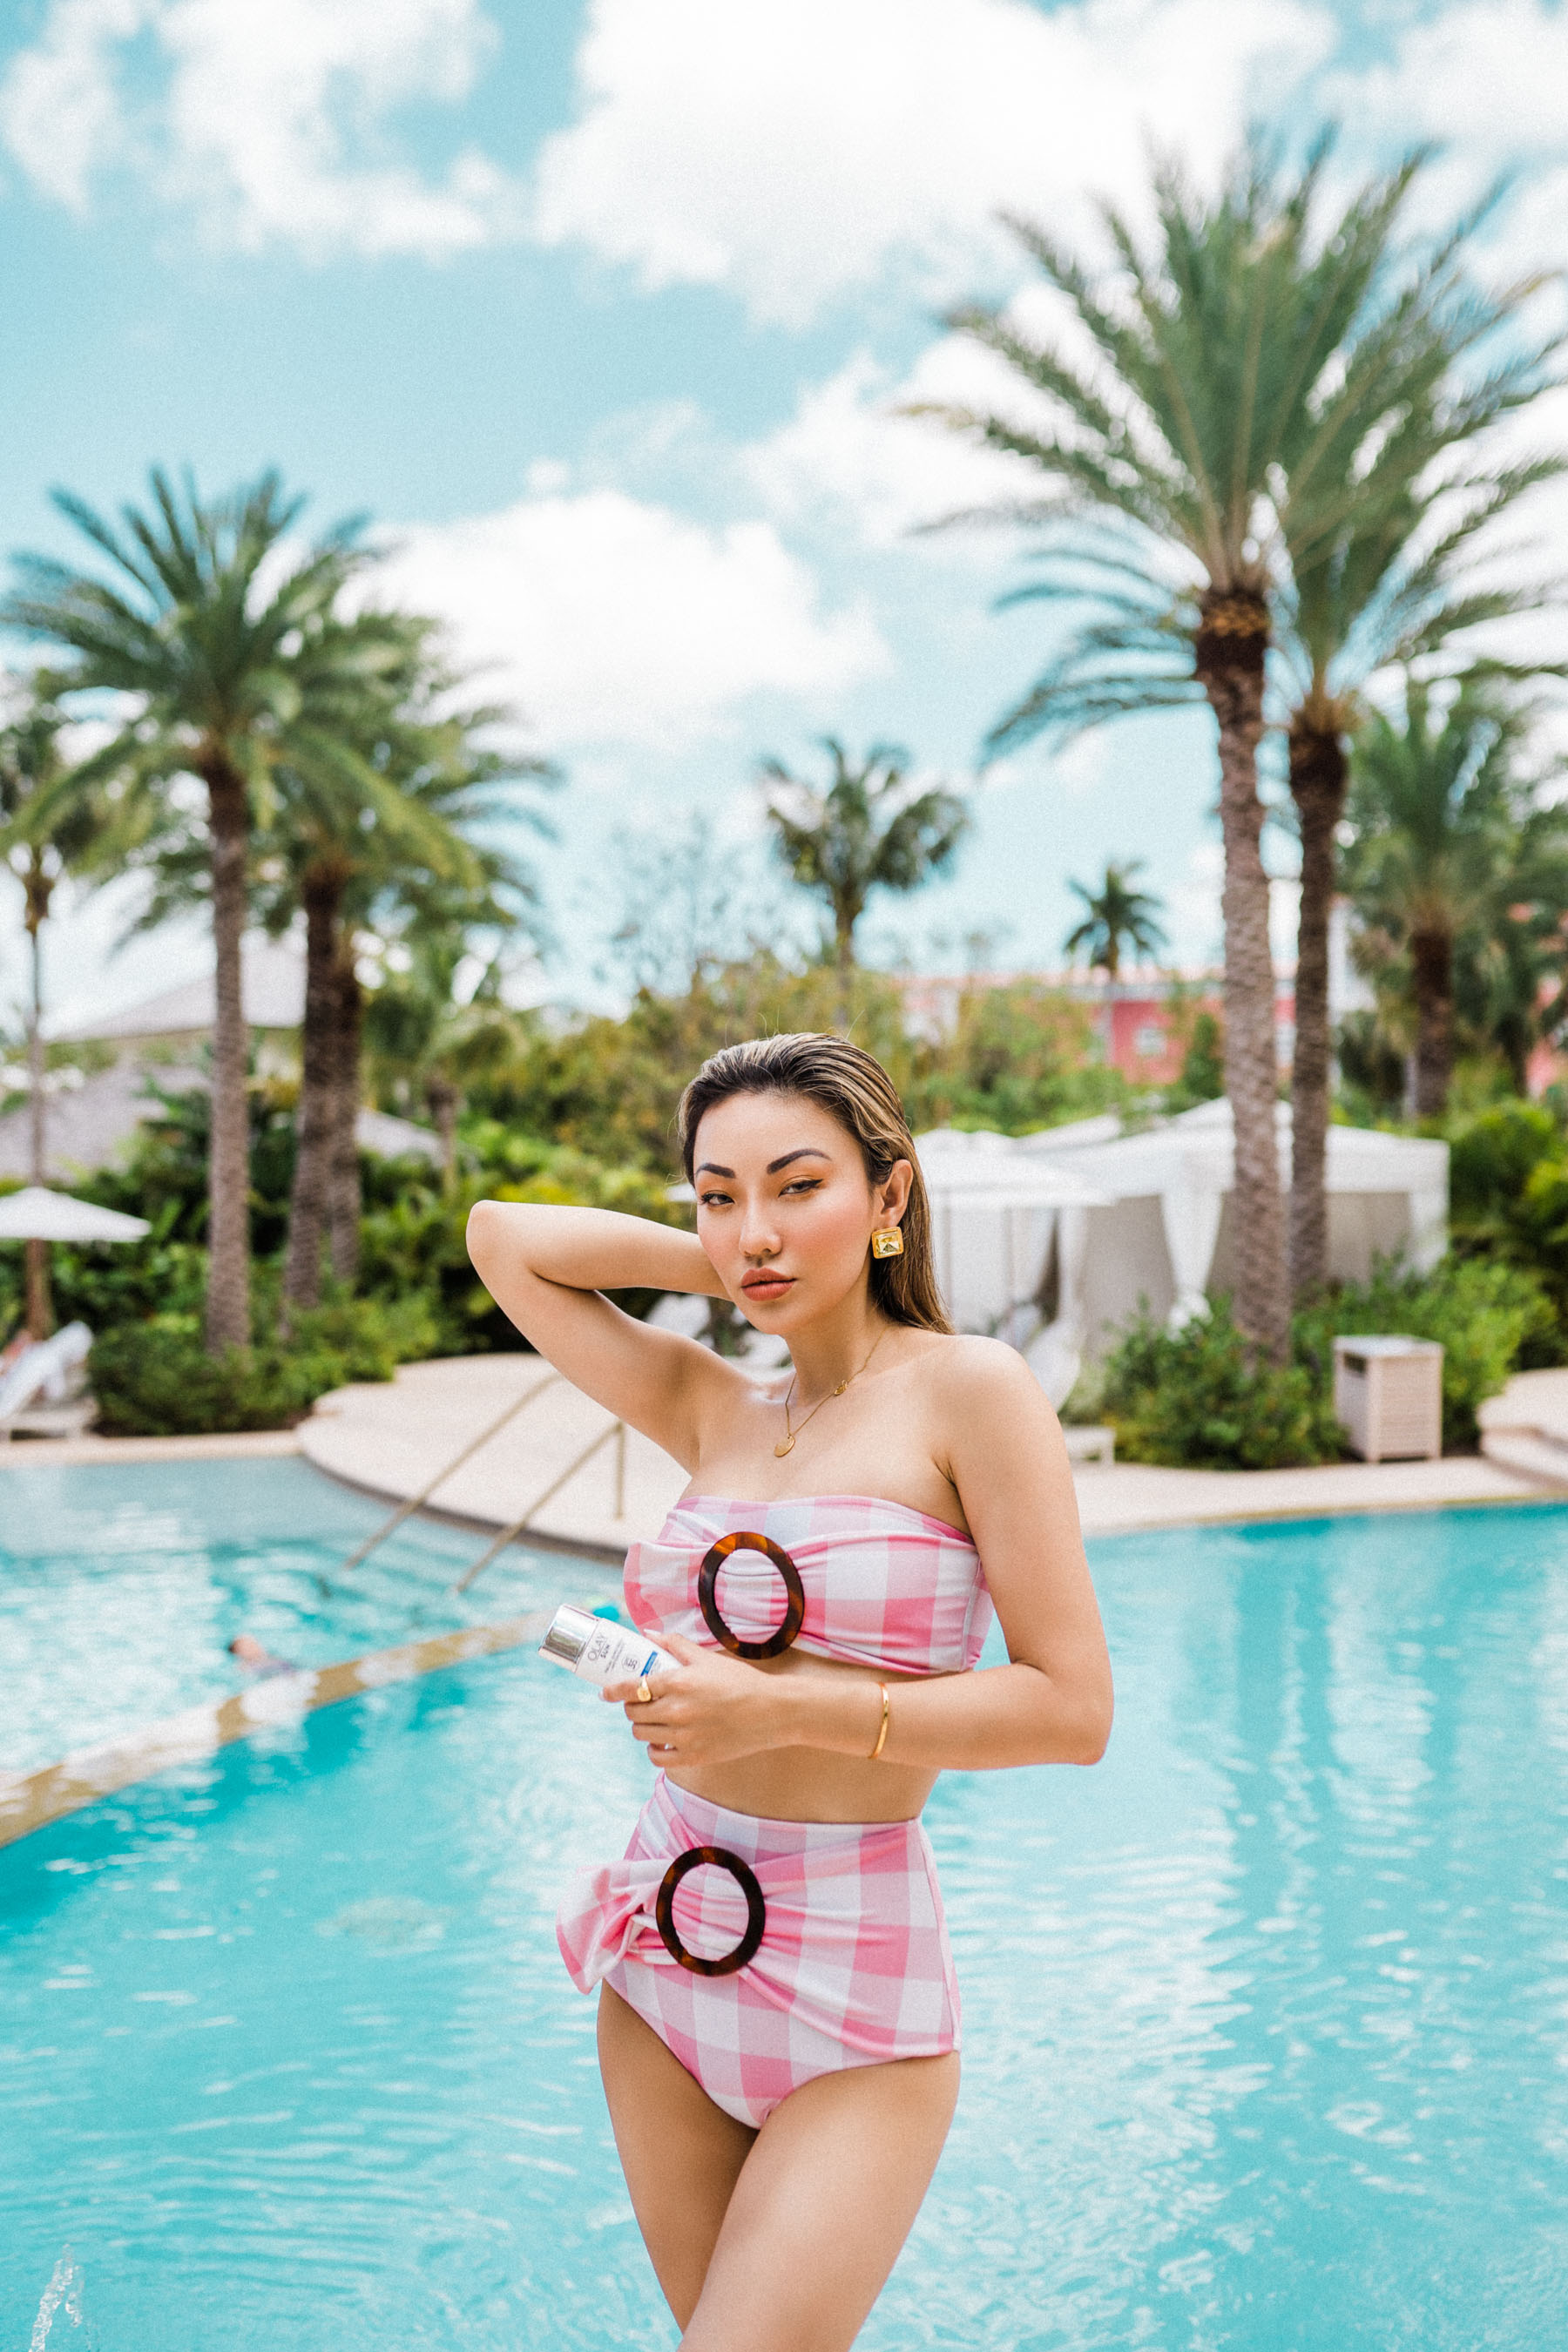 Olay Sun Face Sunscreen, beauty lesson, Rosewood Hotel, Bahamas, swimsuit // Notjessfashion.com